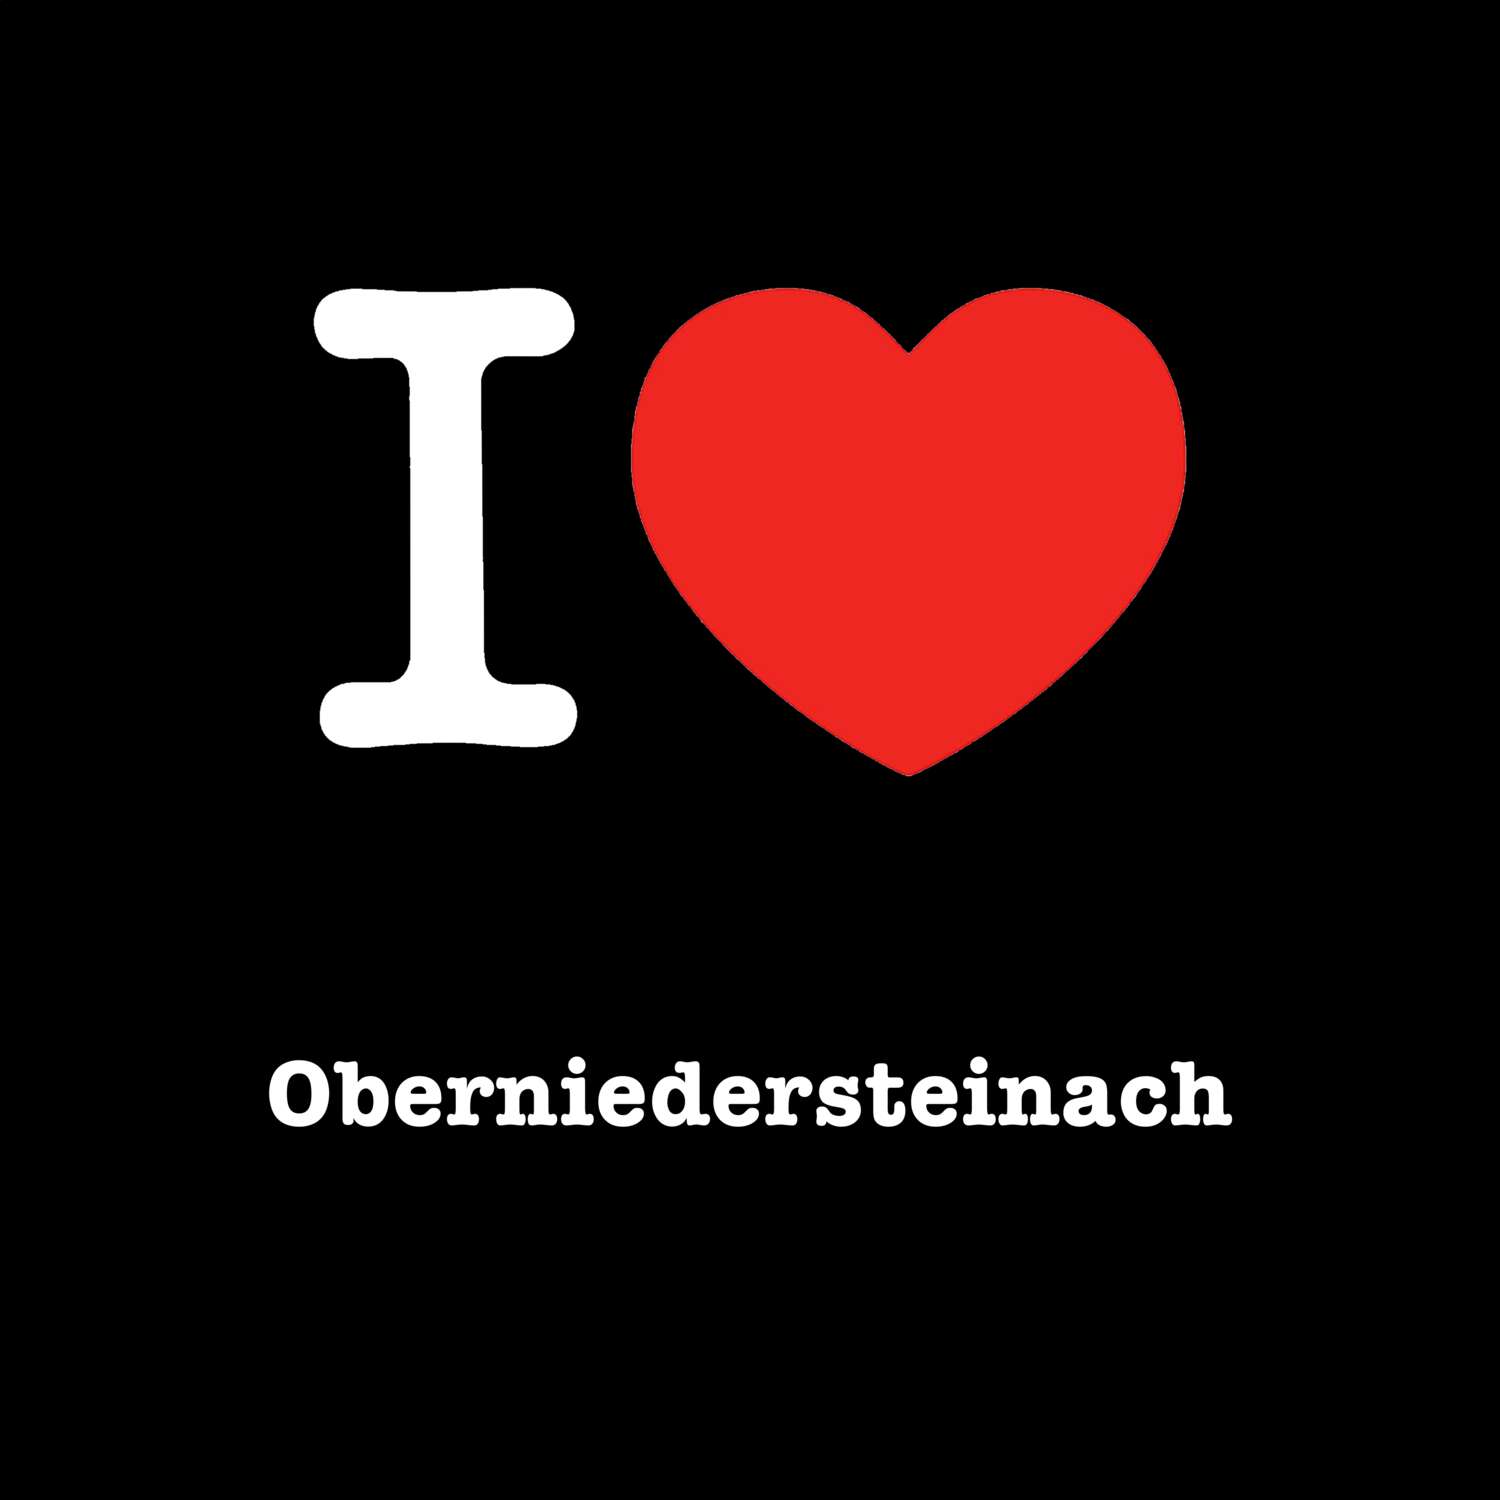 Oberniedersteinach T-Shirt »I love«